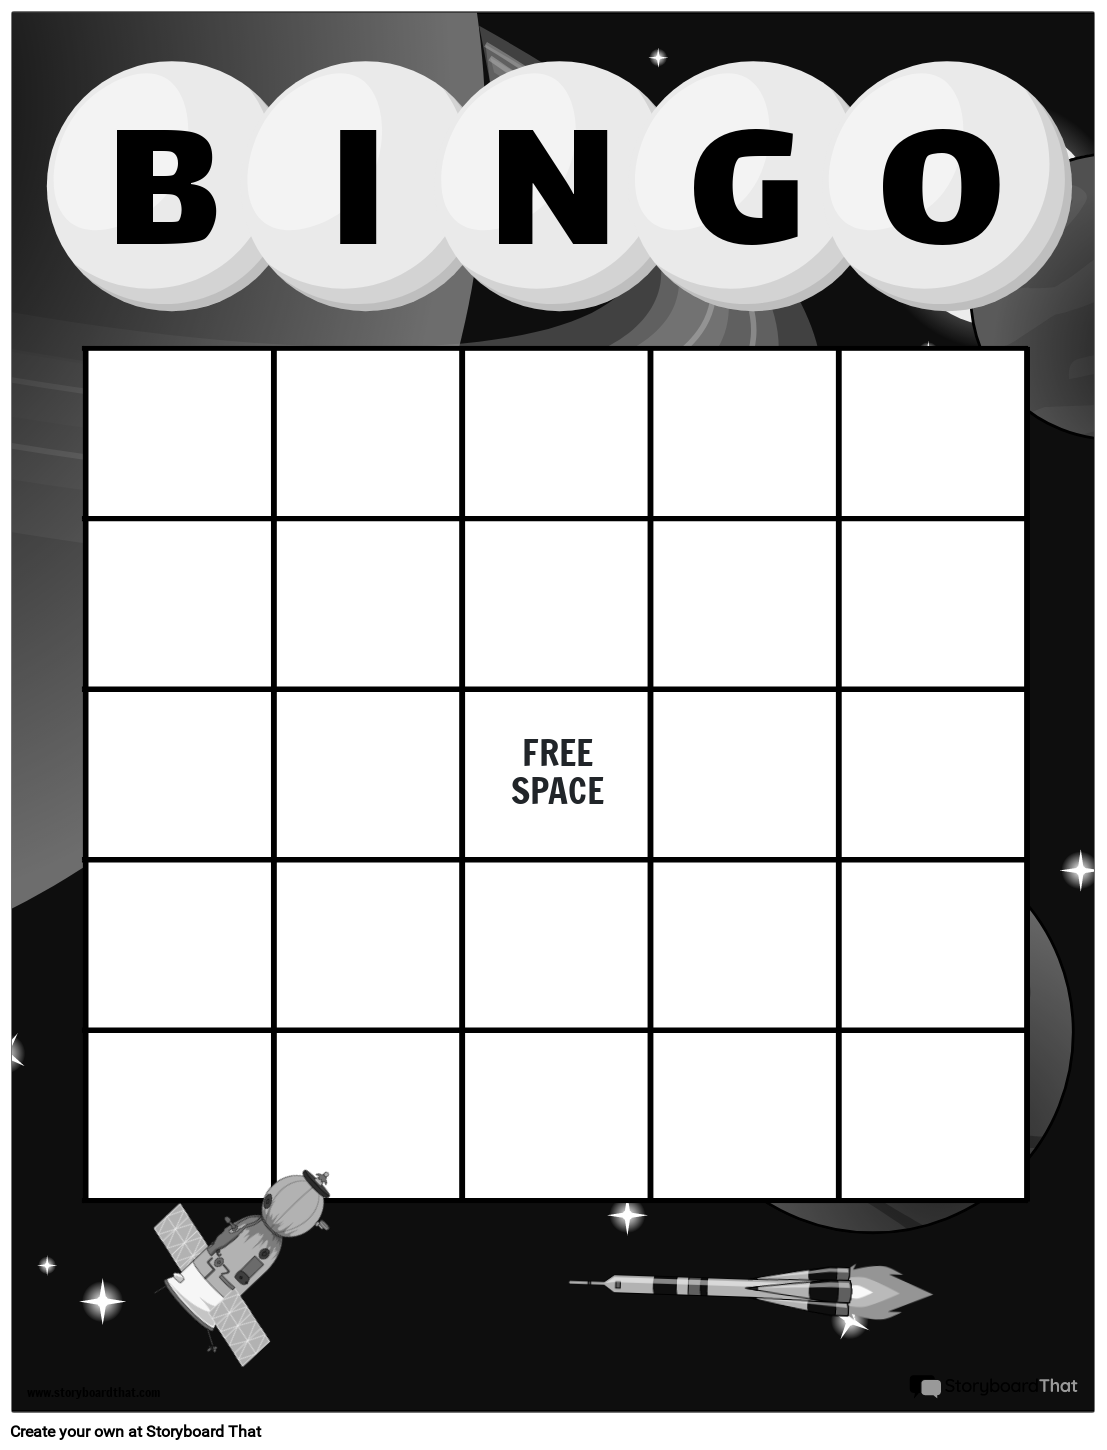 Black & White Space-Themed Bingo Board